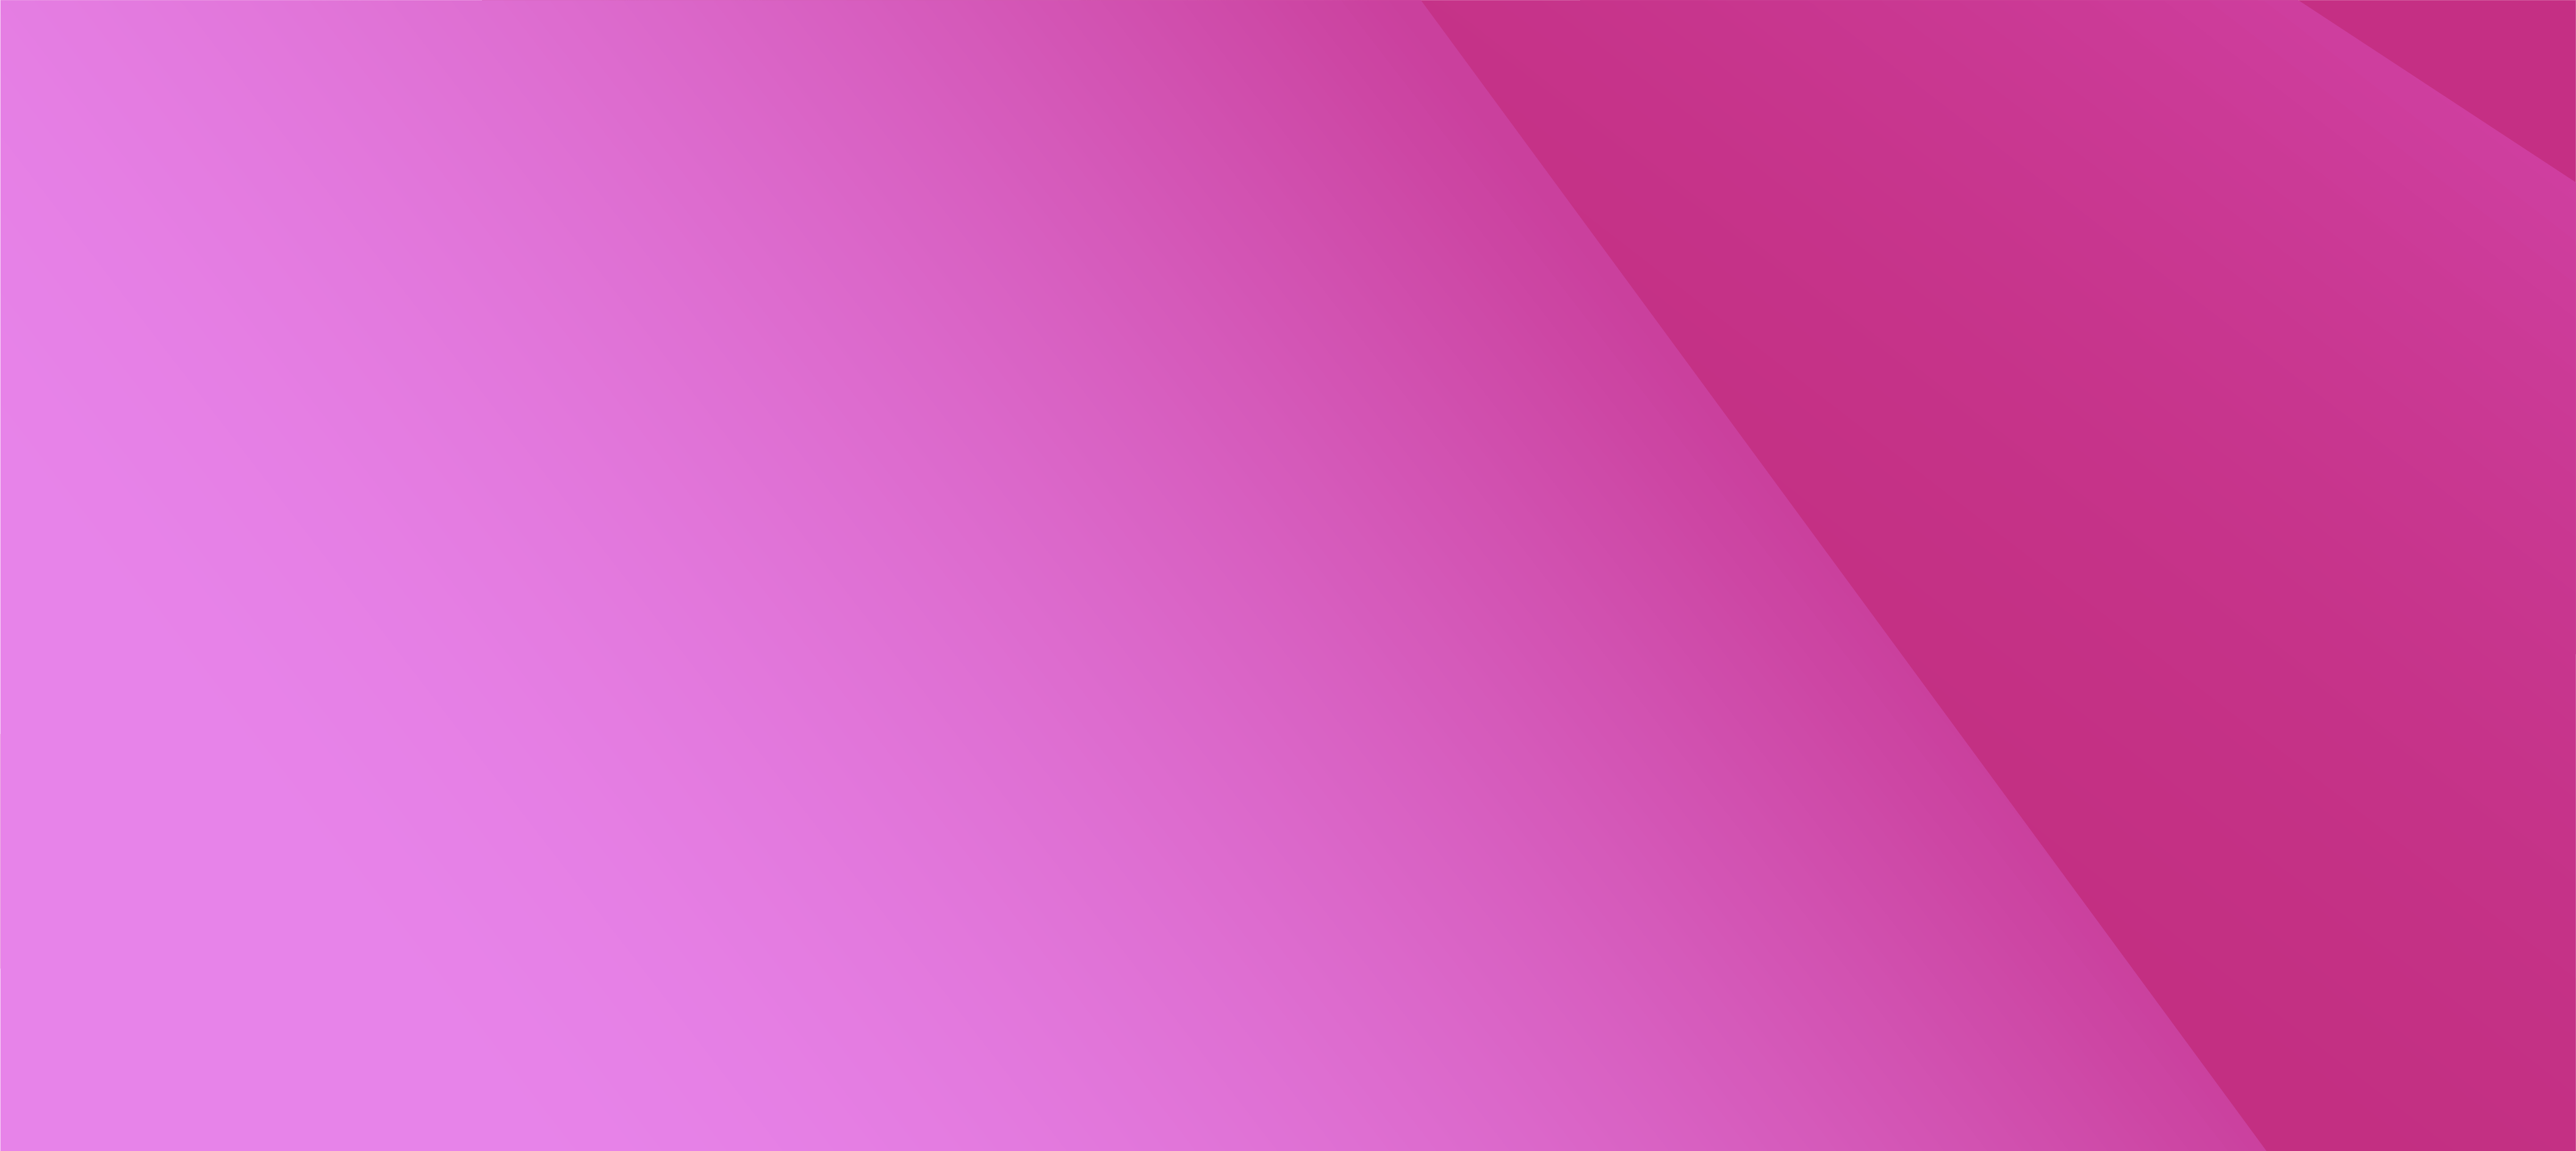 pink NAVEX arrow